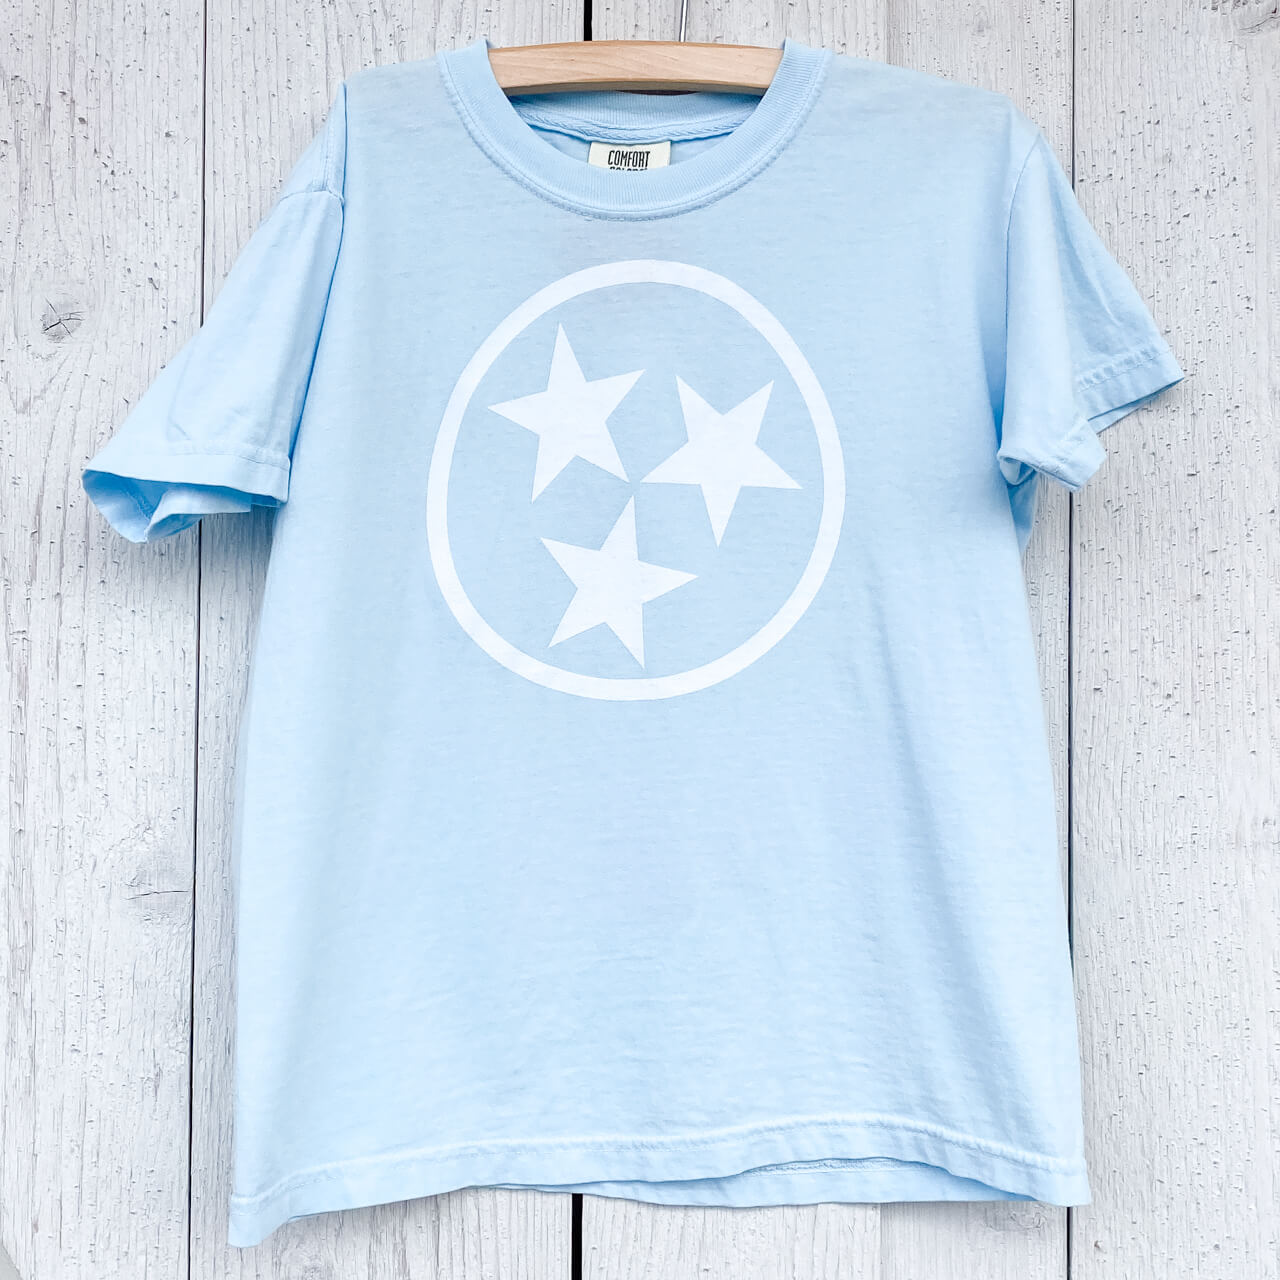 Toddler Tri-Star Shirt \u2022 Toddler TN Shirt \u2022 Toddler Tennessee Shirt \u2022 TN Tristar Shirt \u2022 Tennessee Tristar Tee \u2022 Bella+Canvas 3413T